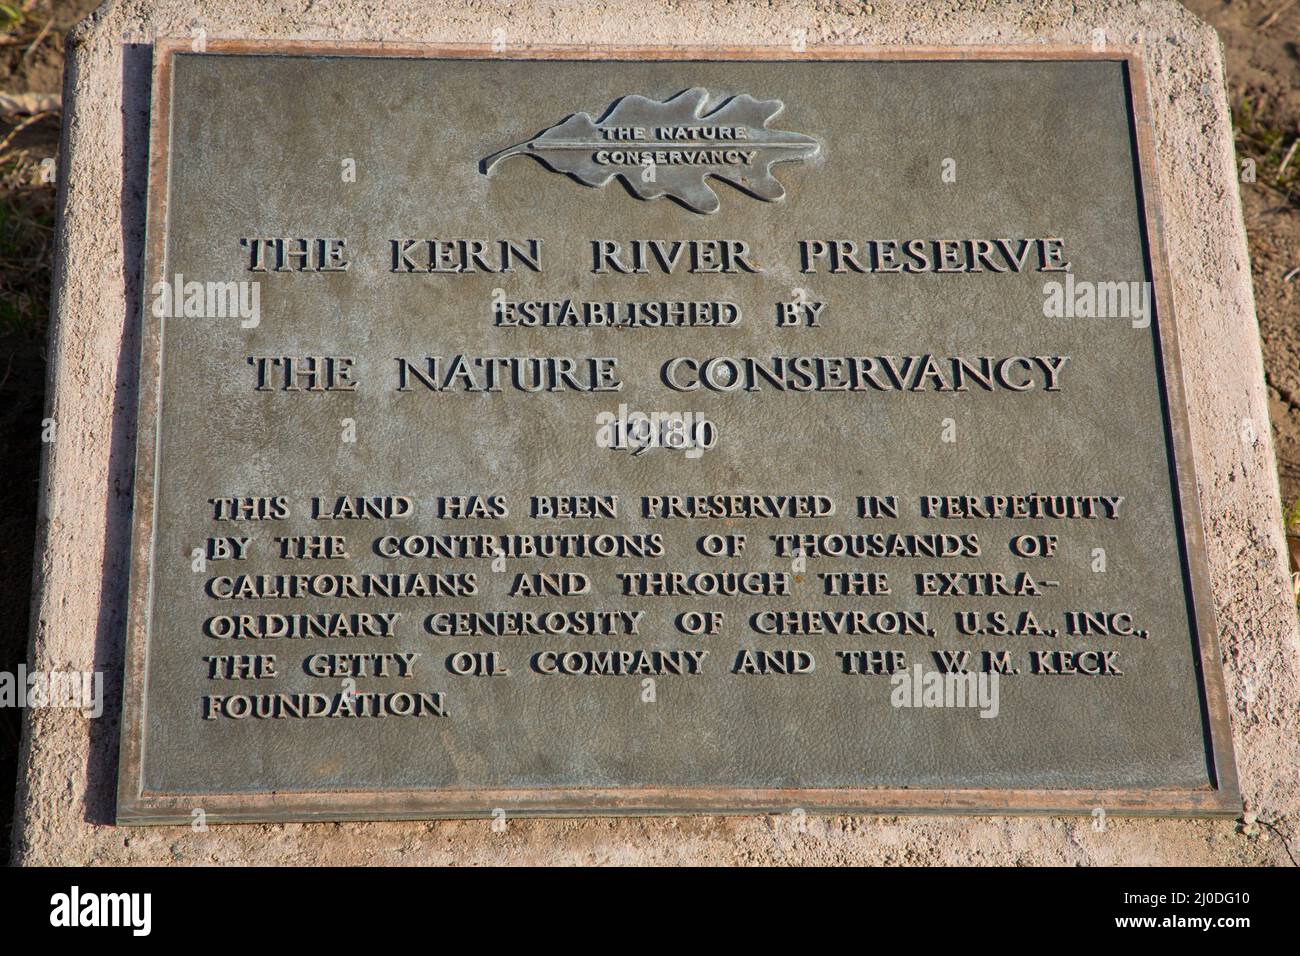 Dedication plaque, Kern River Preserve, California Stock Photo